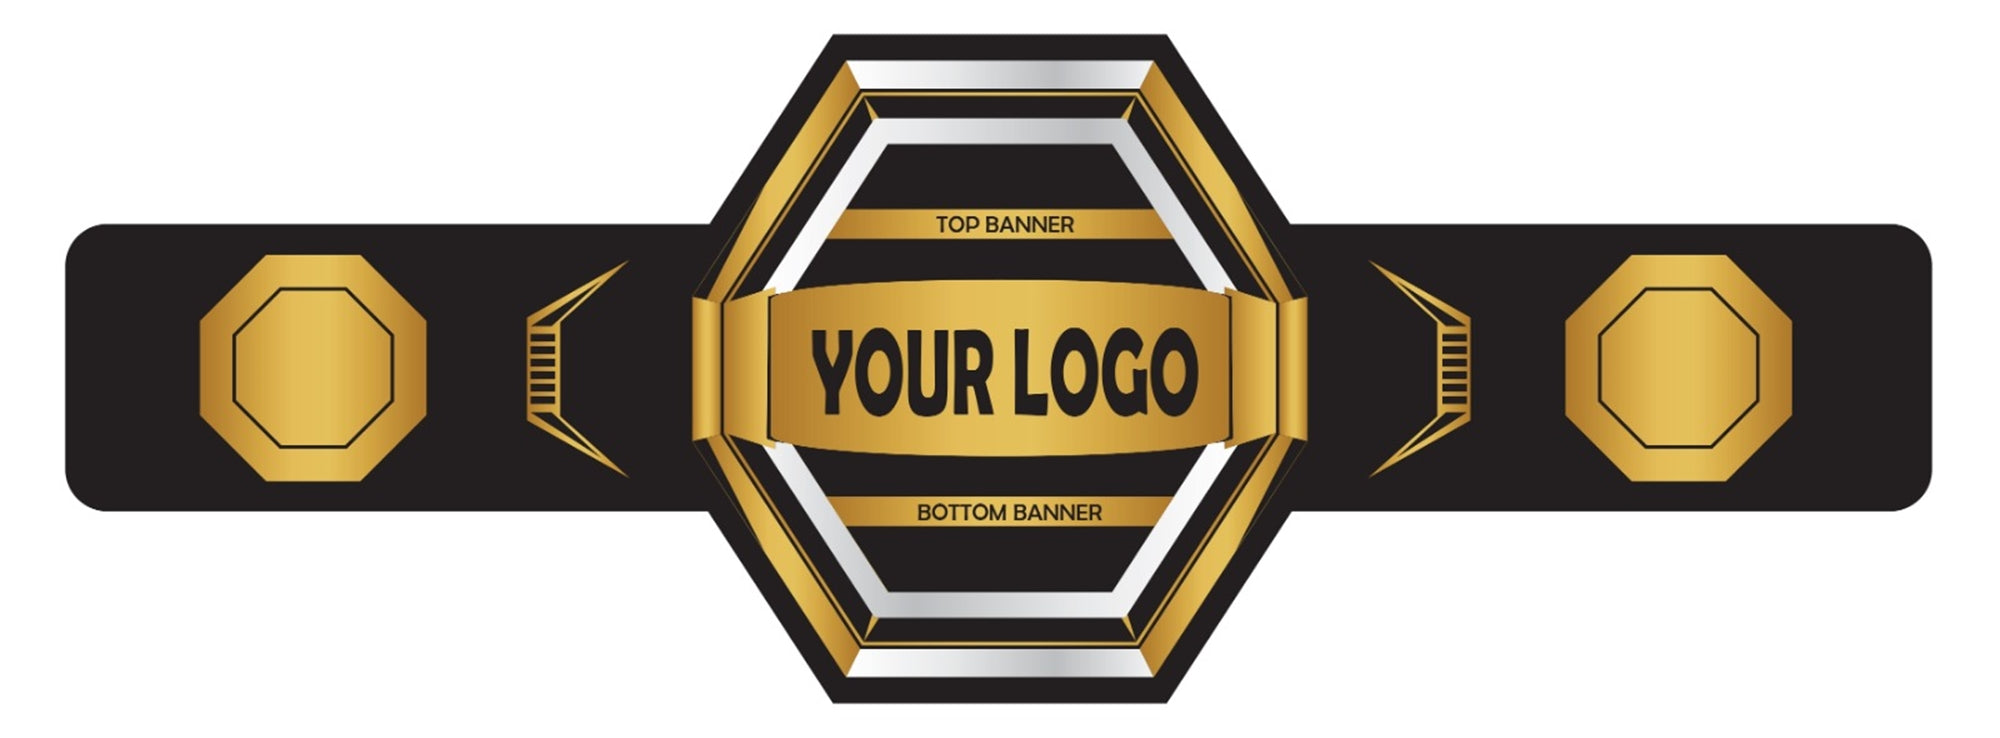 Custom Name and Logo Wrestling Championship Belt - Customize Wrestling Belts